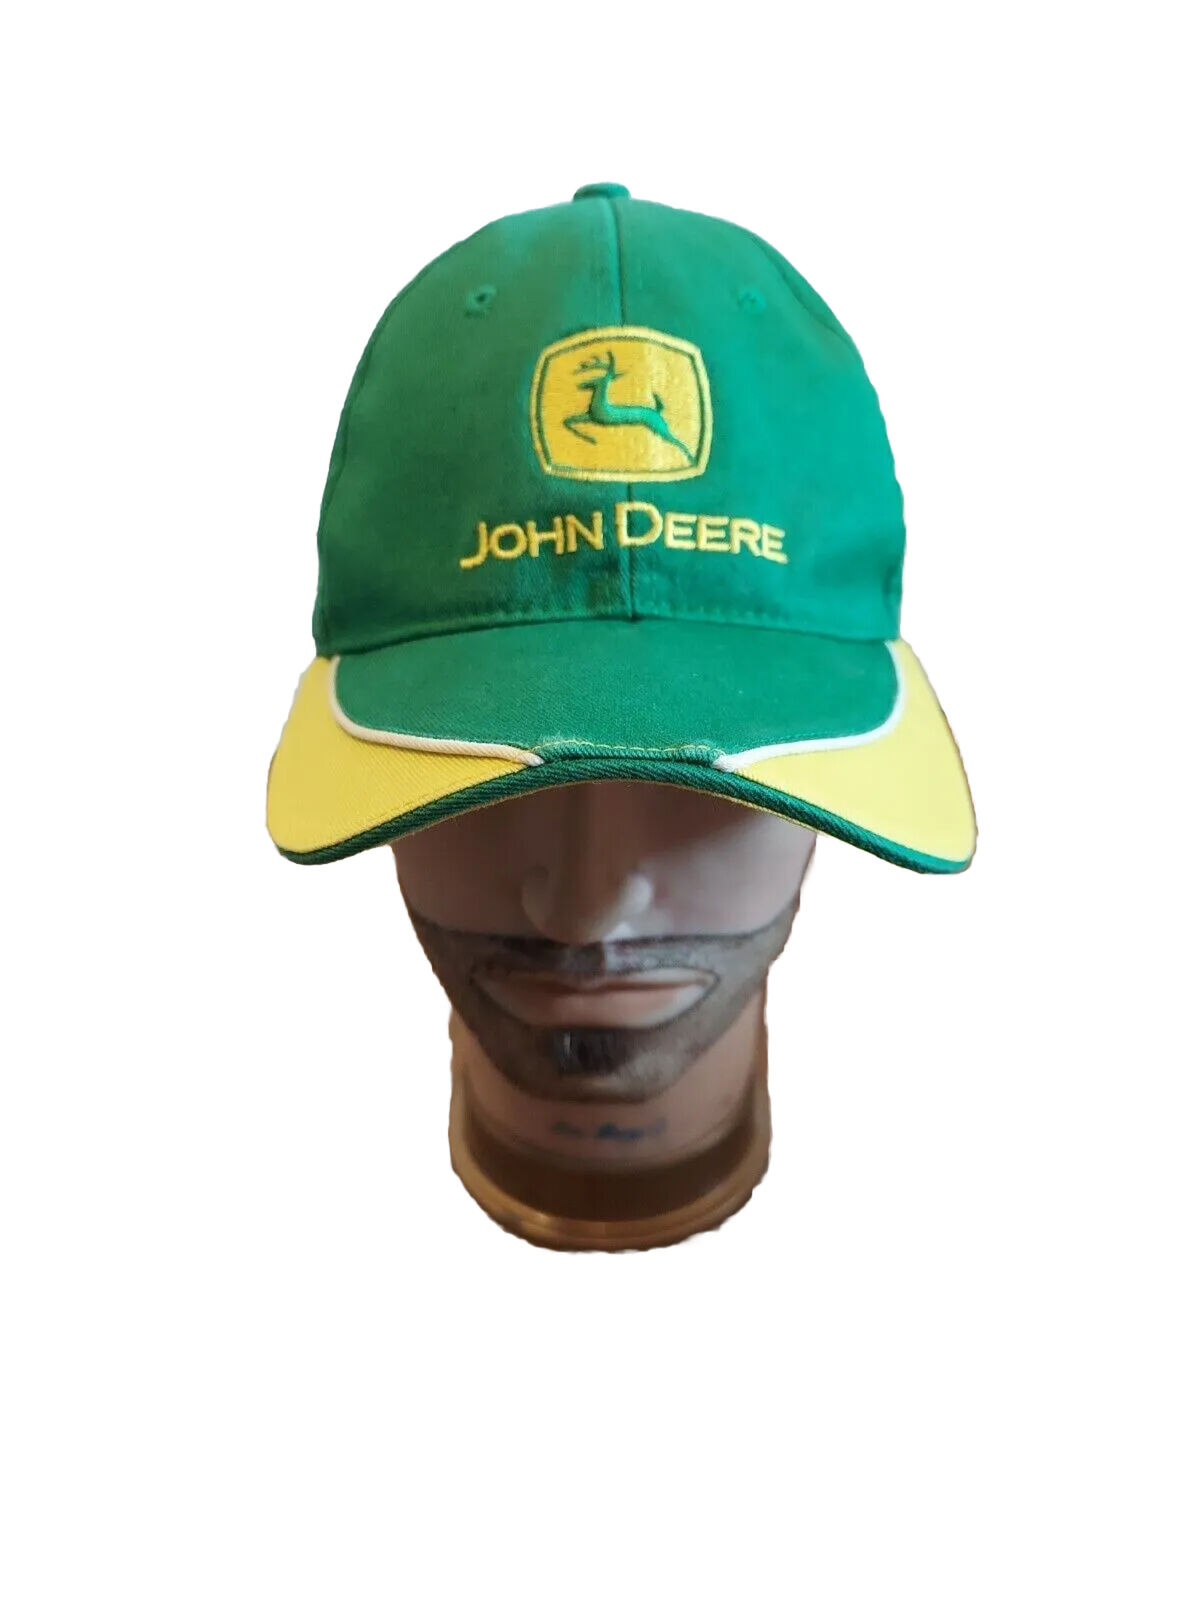 Vintage JOHN DEERE K Products Yellow And Green Bill Hat Baseball Cap Adjustable